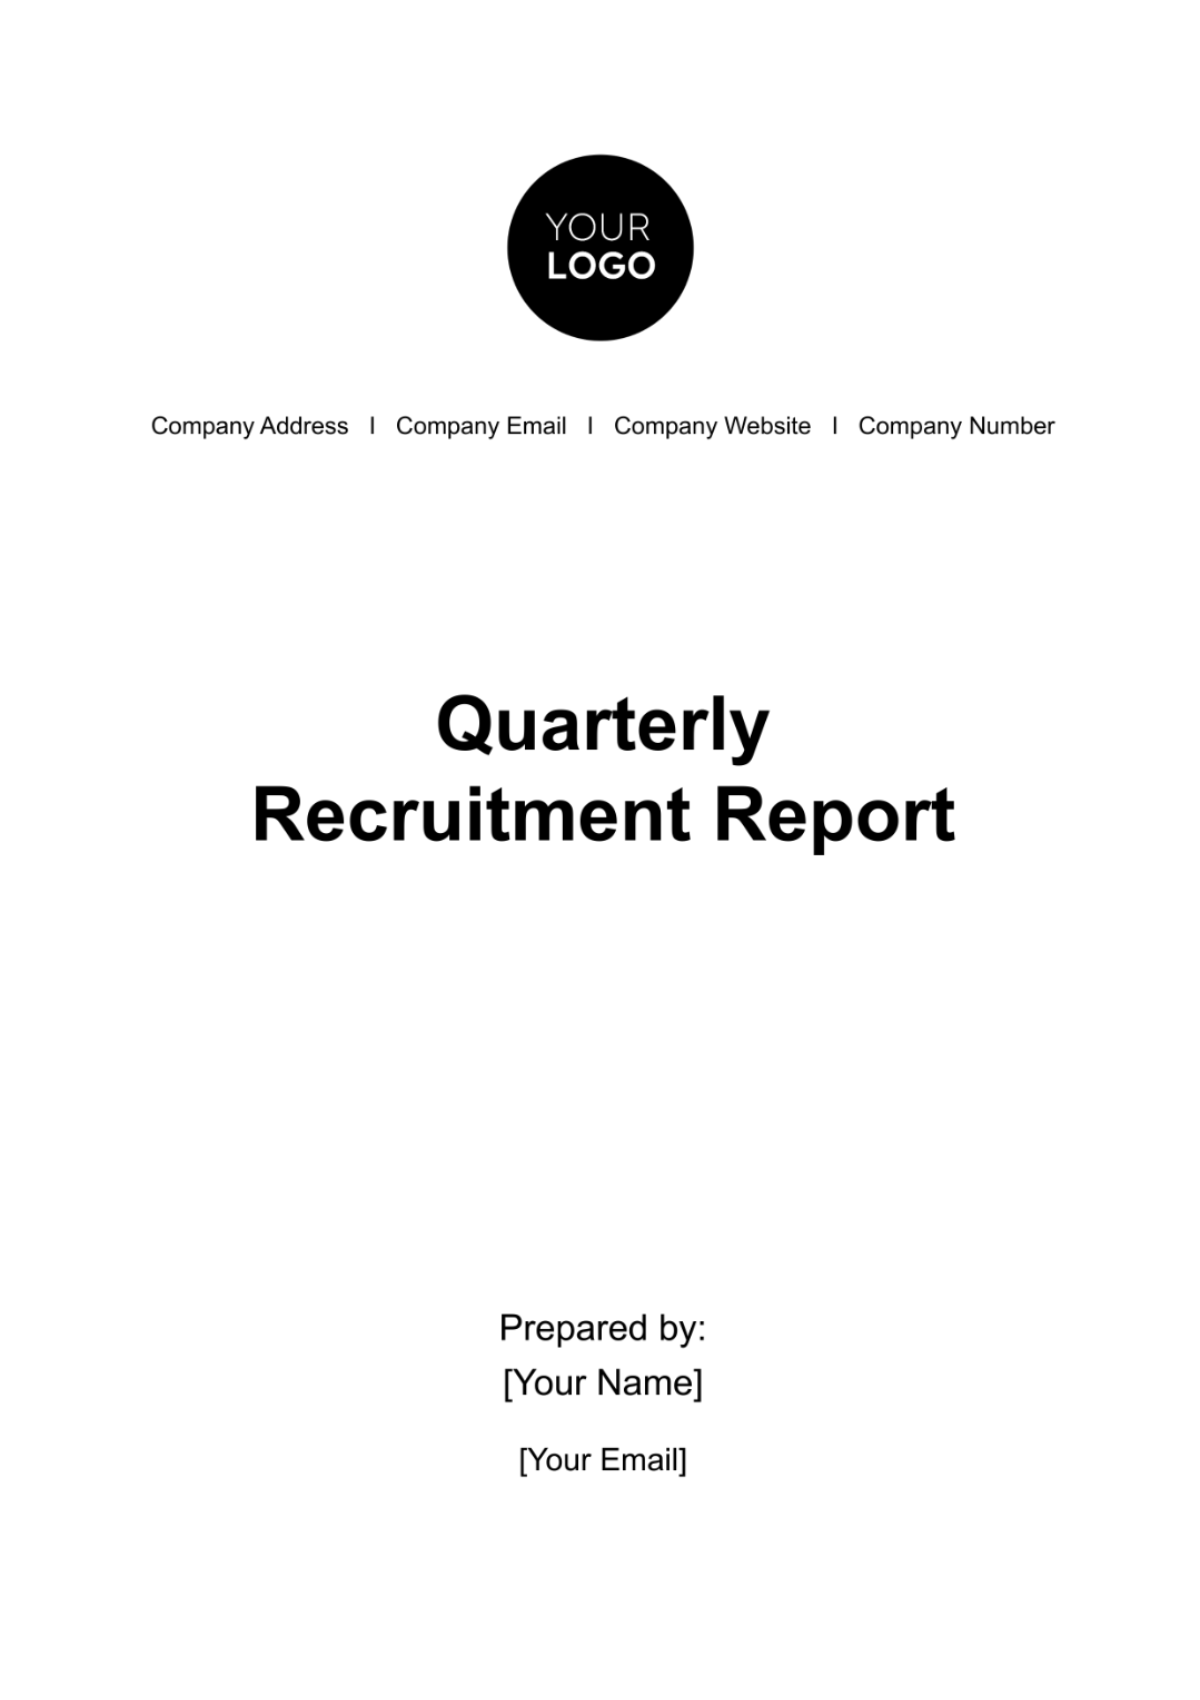 Free Quarterly Recruitment Report HR Template